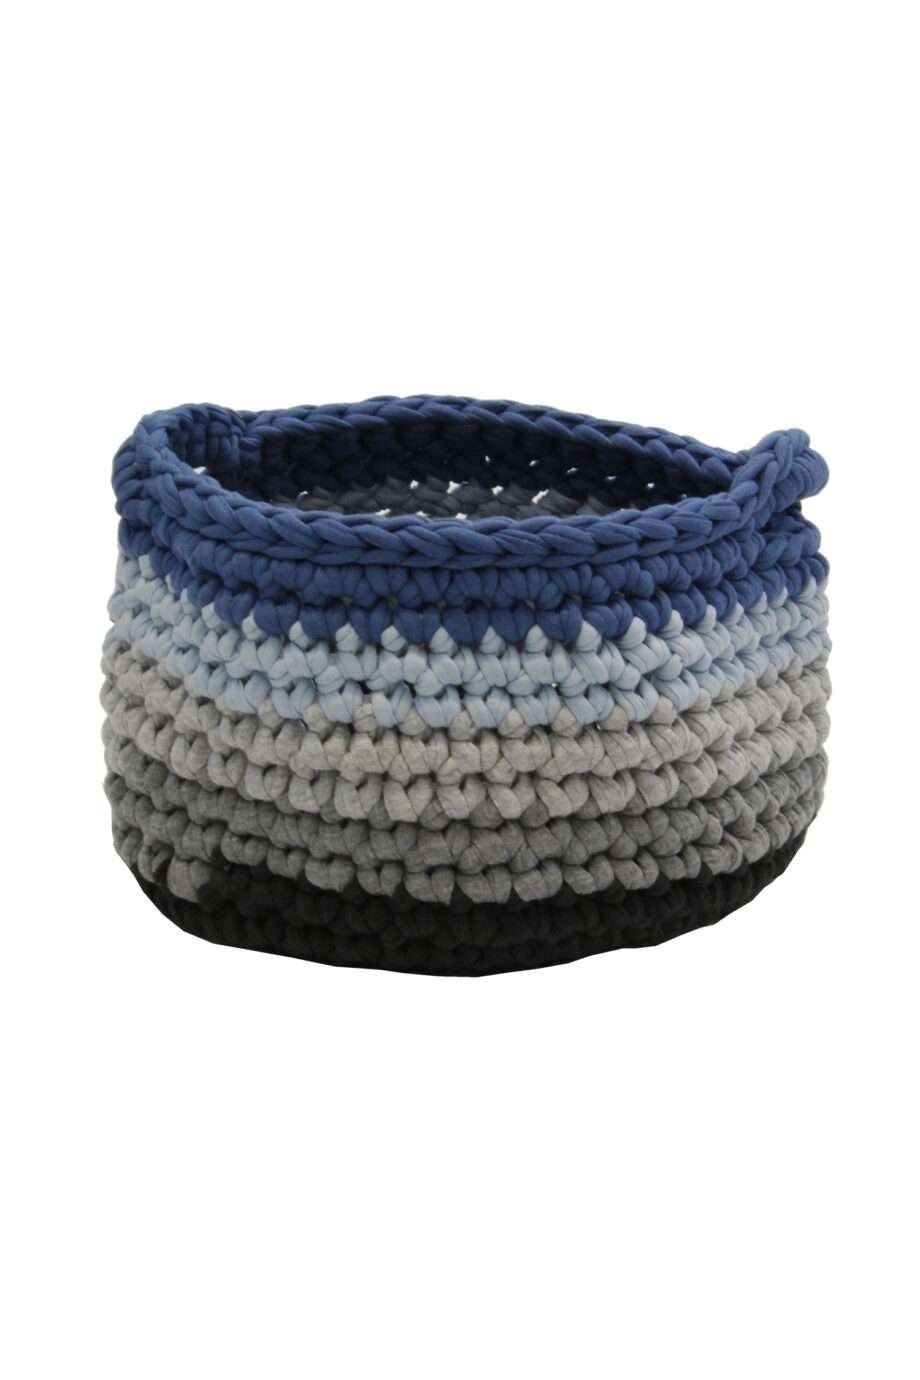 groovy jeans blue crochet cotton basket xsmall